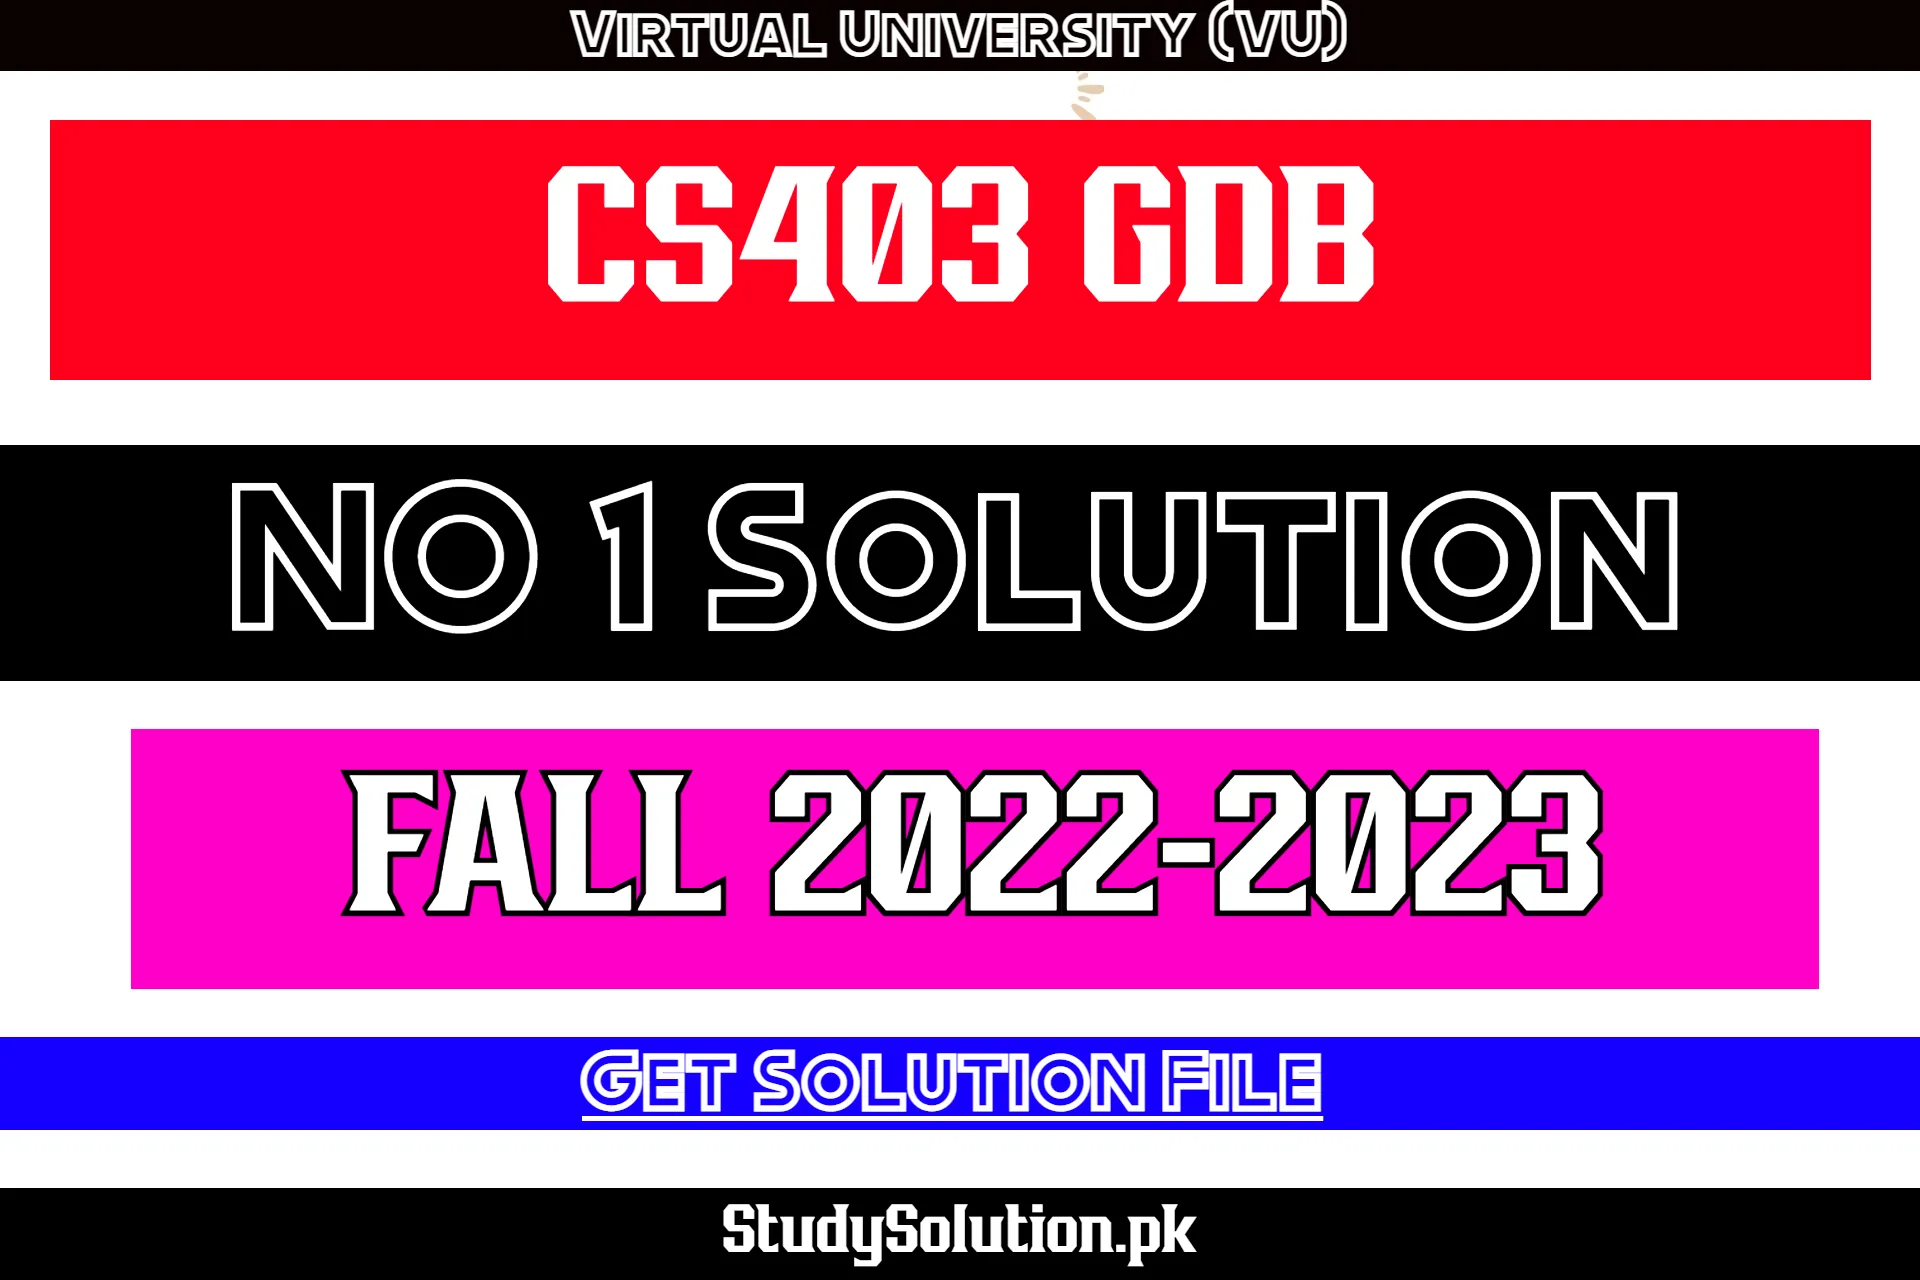 CS403 GDB No 1 Solution Fall 2022